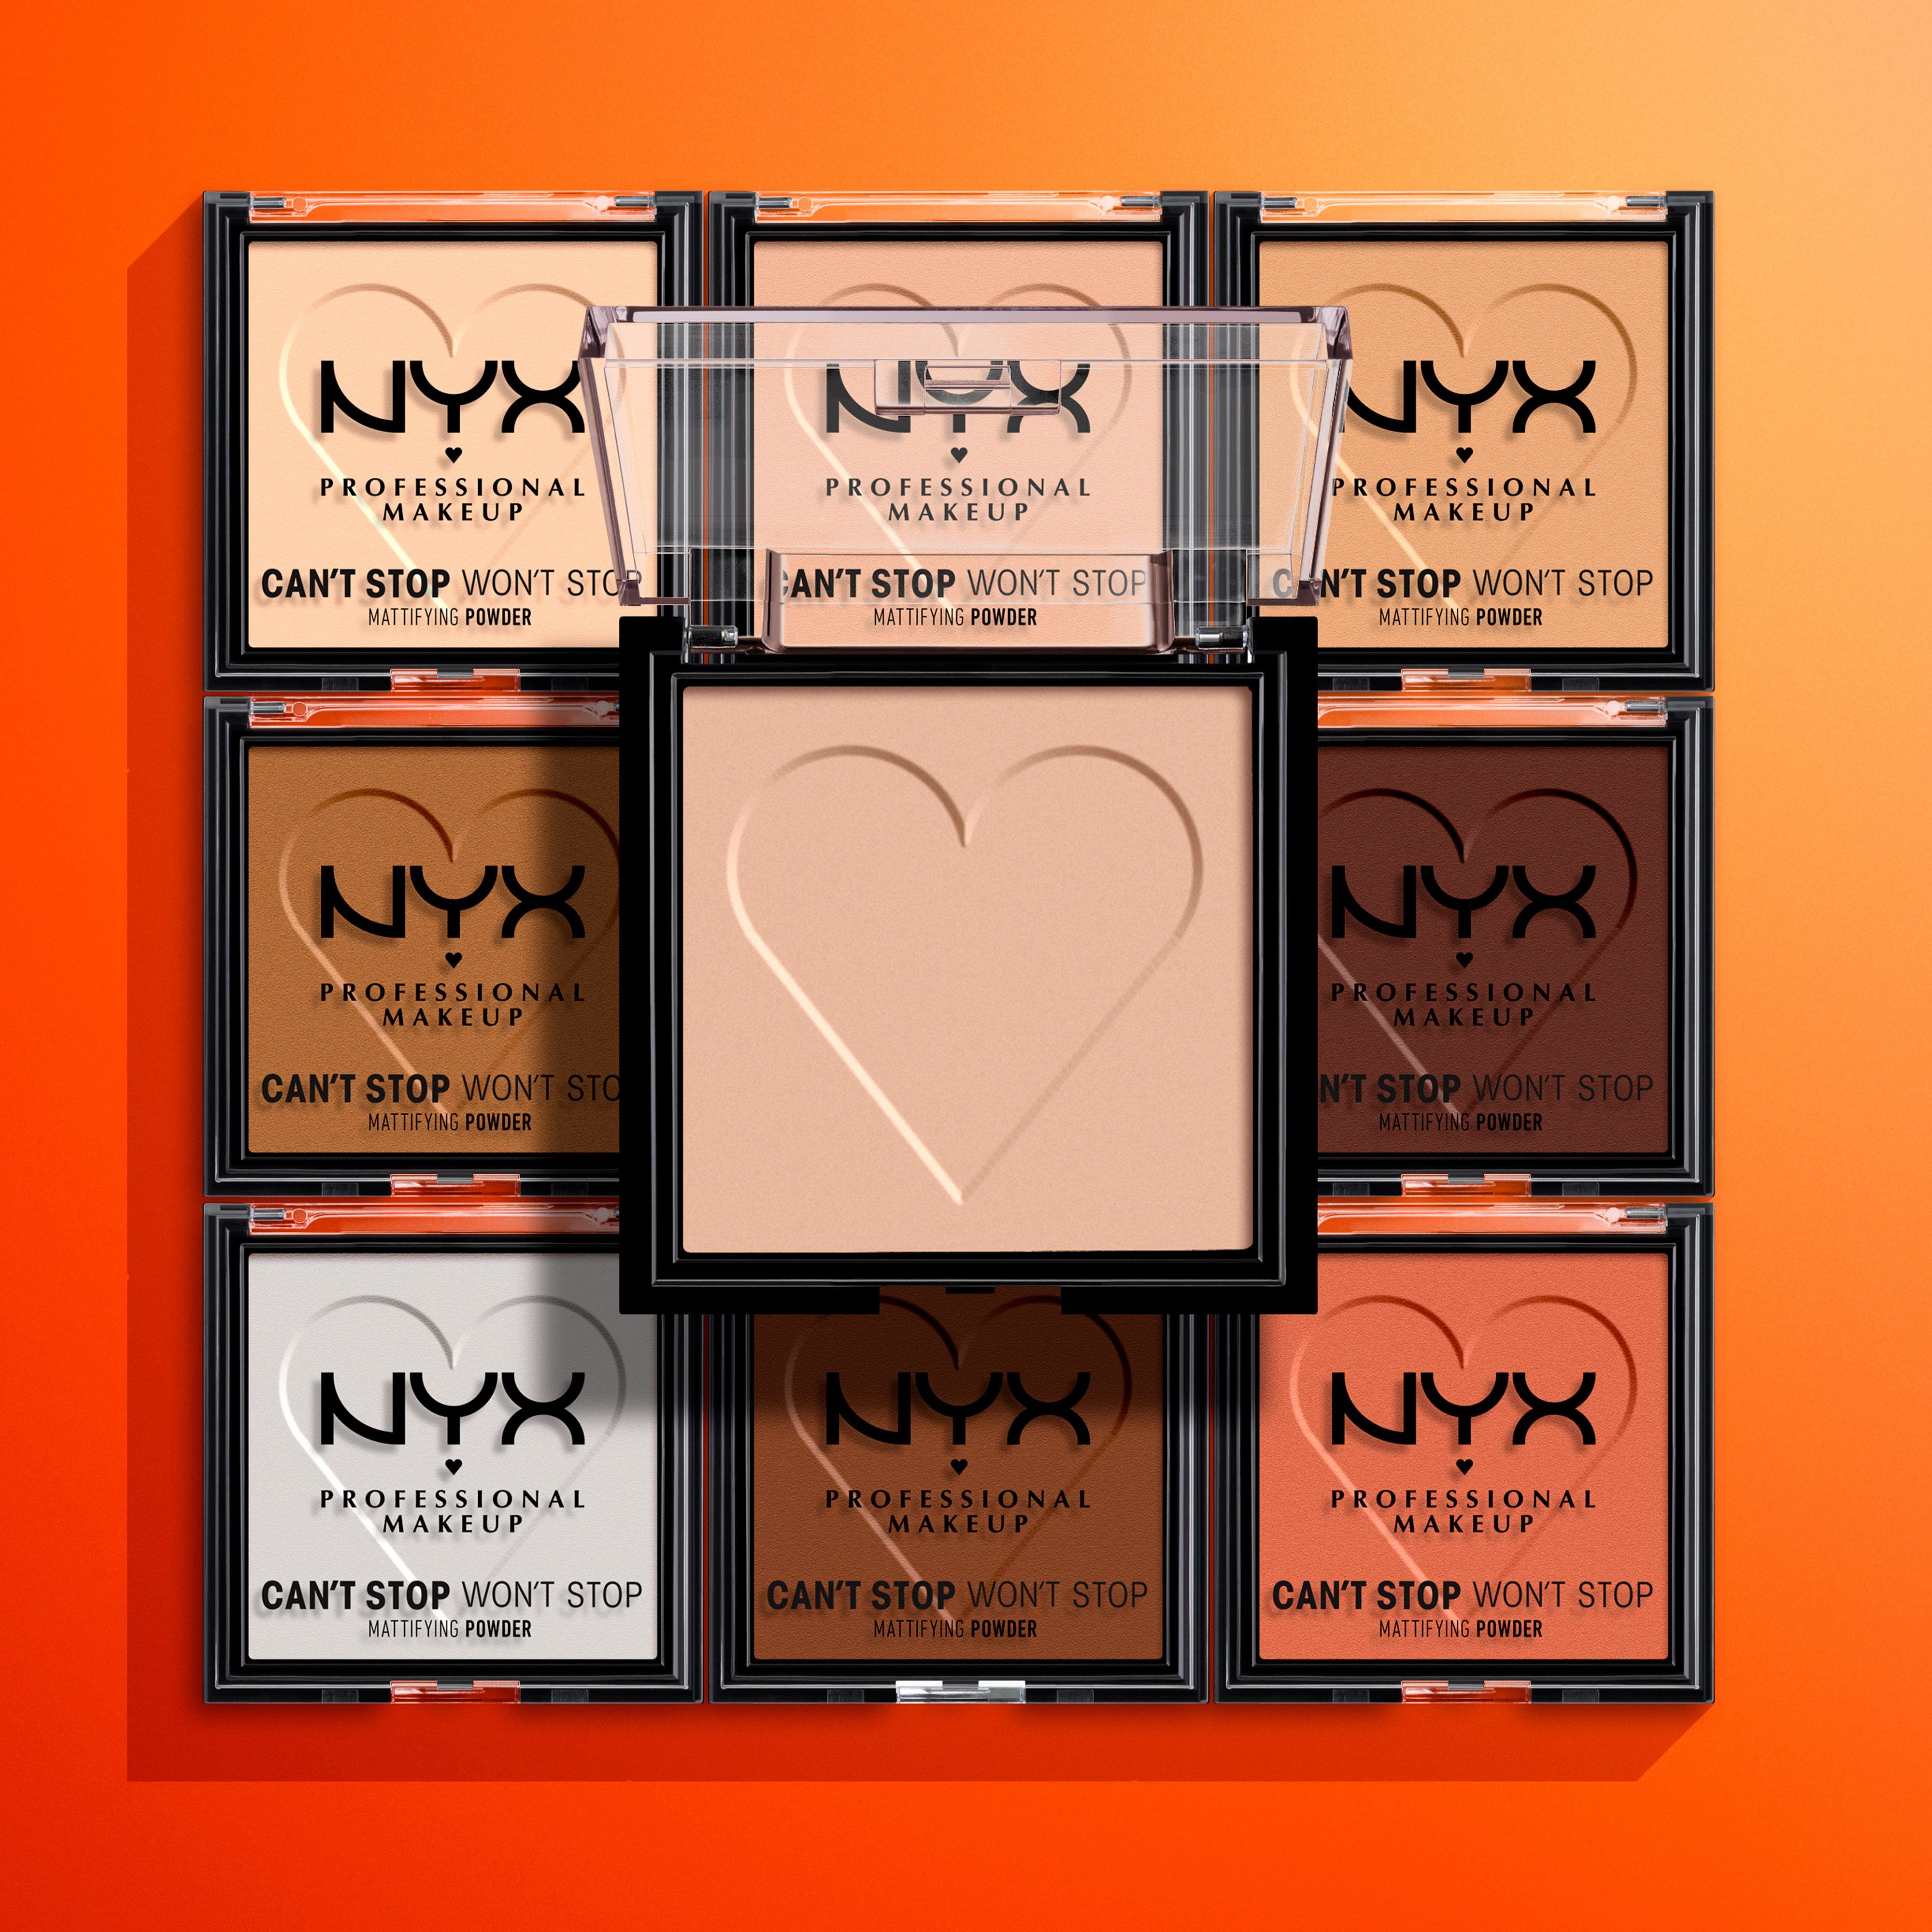 NYX Puder Professional Mattifying 02 Light Powder CSWS Makeup